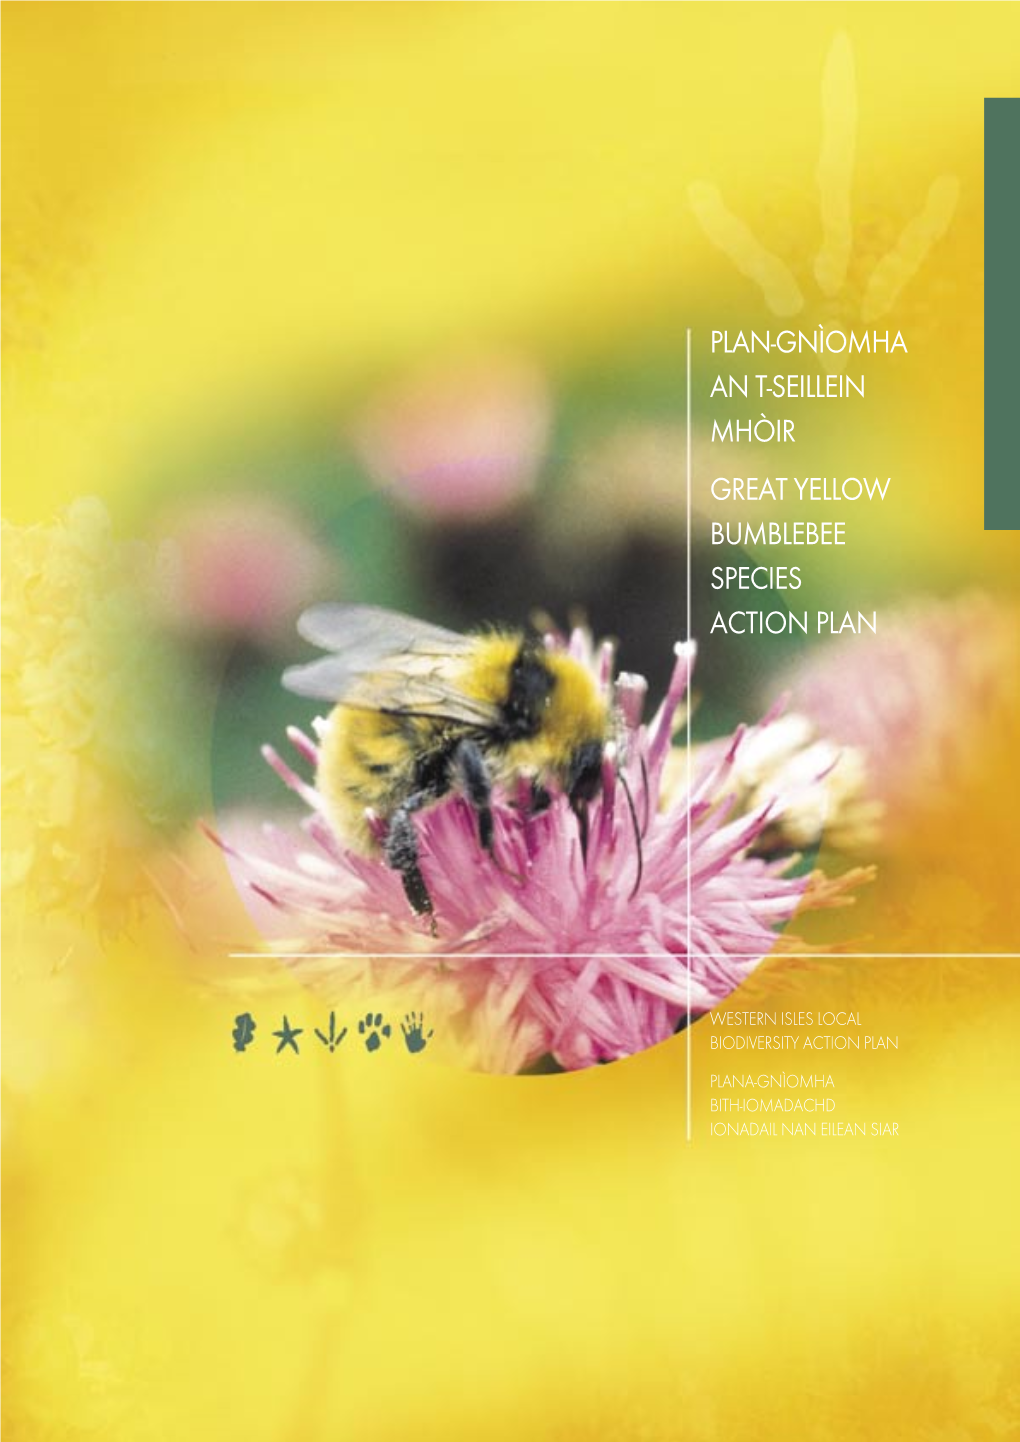 Plan-Gnìomha an T-Seillein Mhòir Great Yellow Bumblebee Species Action Plan